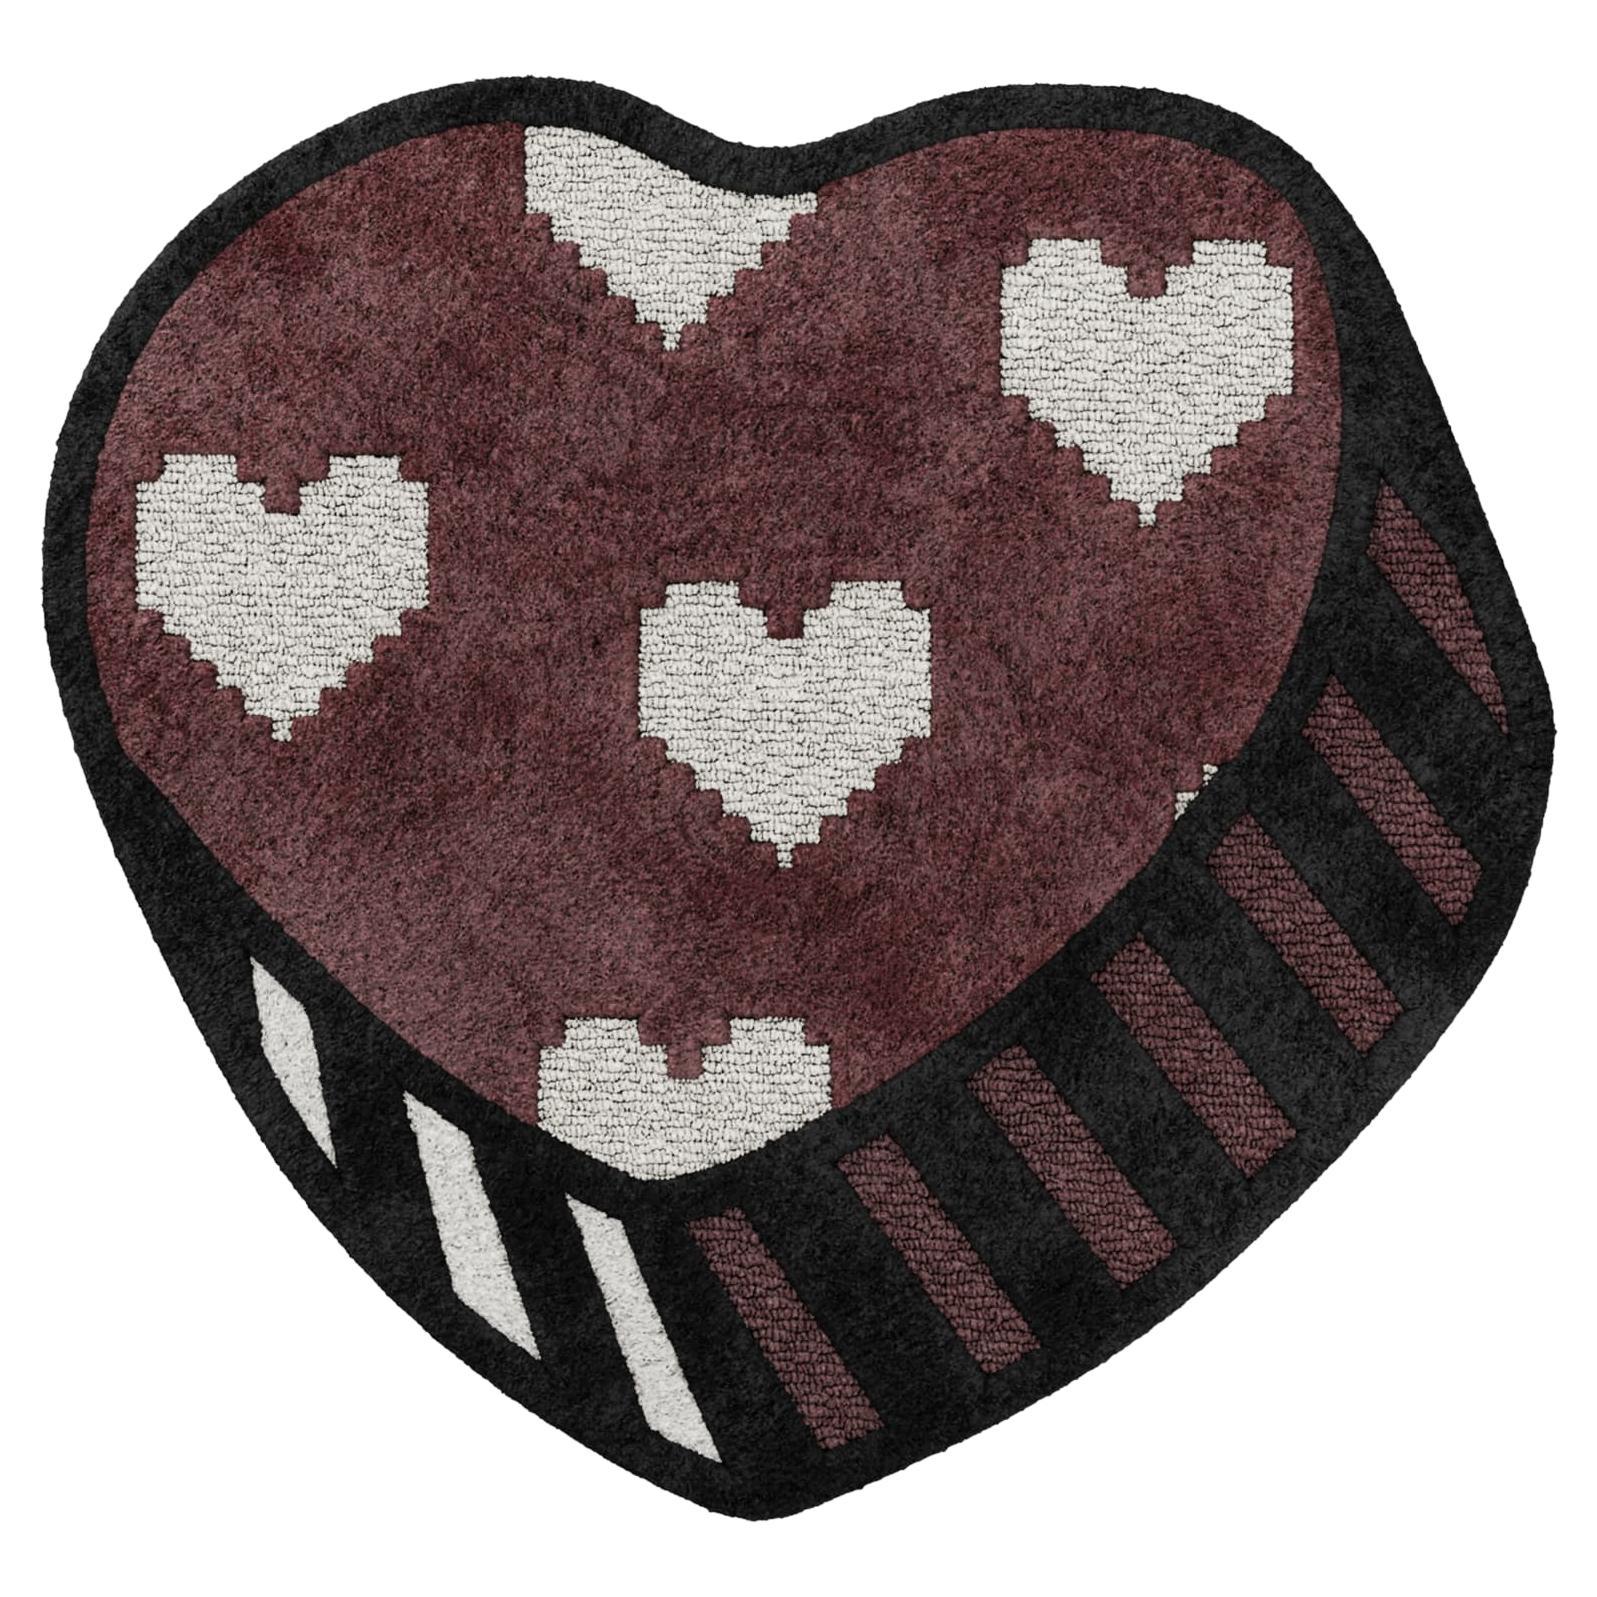 Custom Made Heart Shaped Design Carpet for Pets